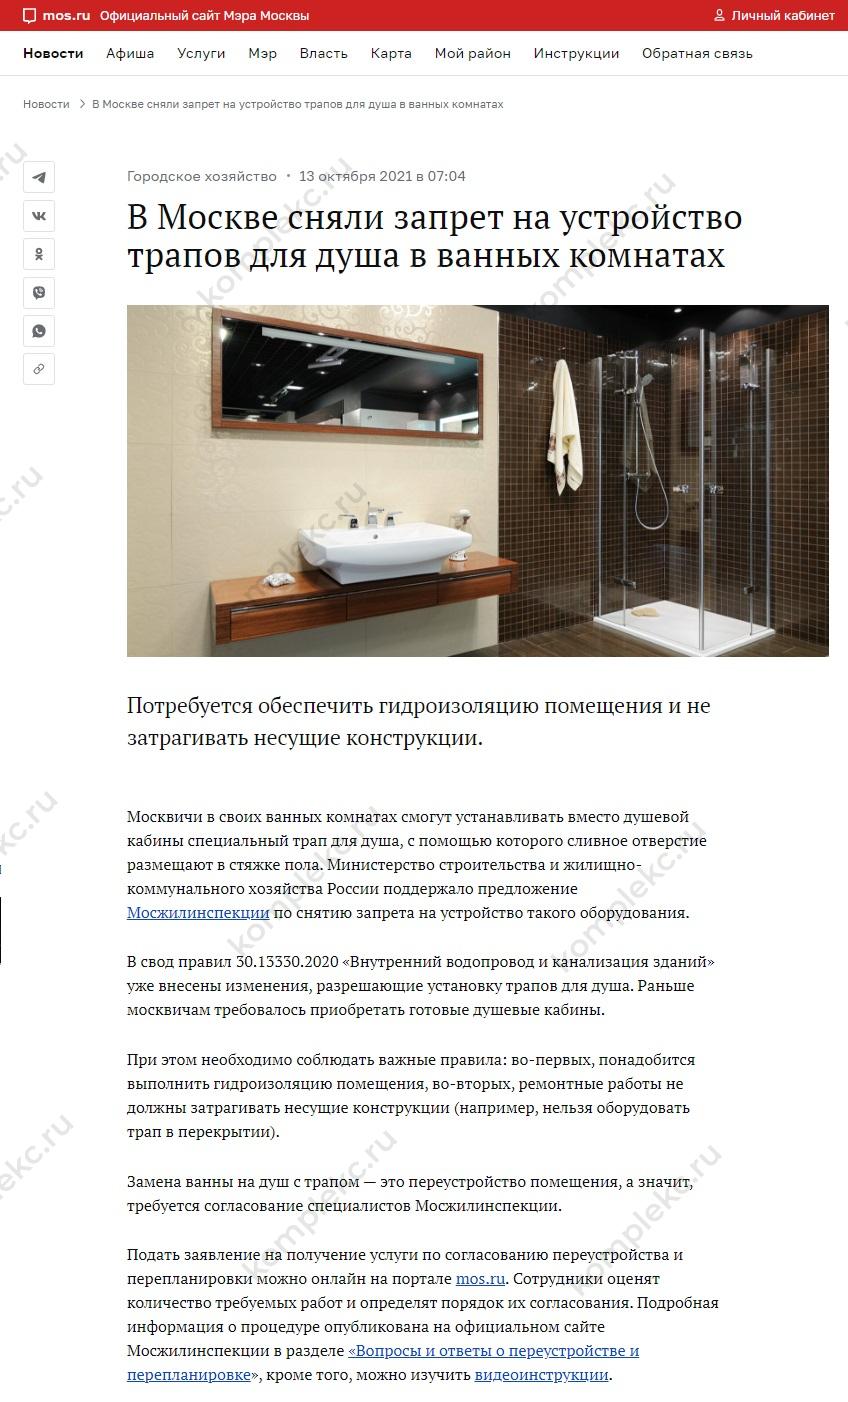 Снятие запрета на устройство трапов в ванных комнатах